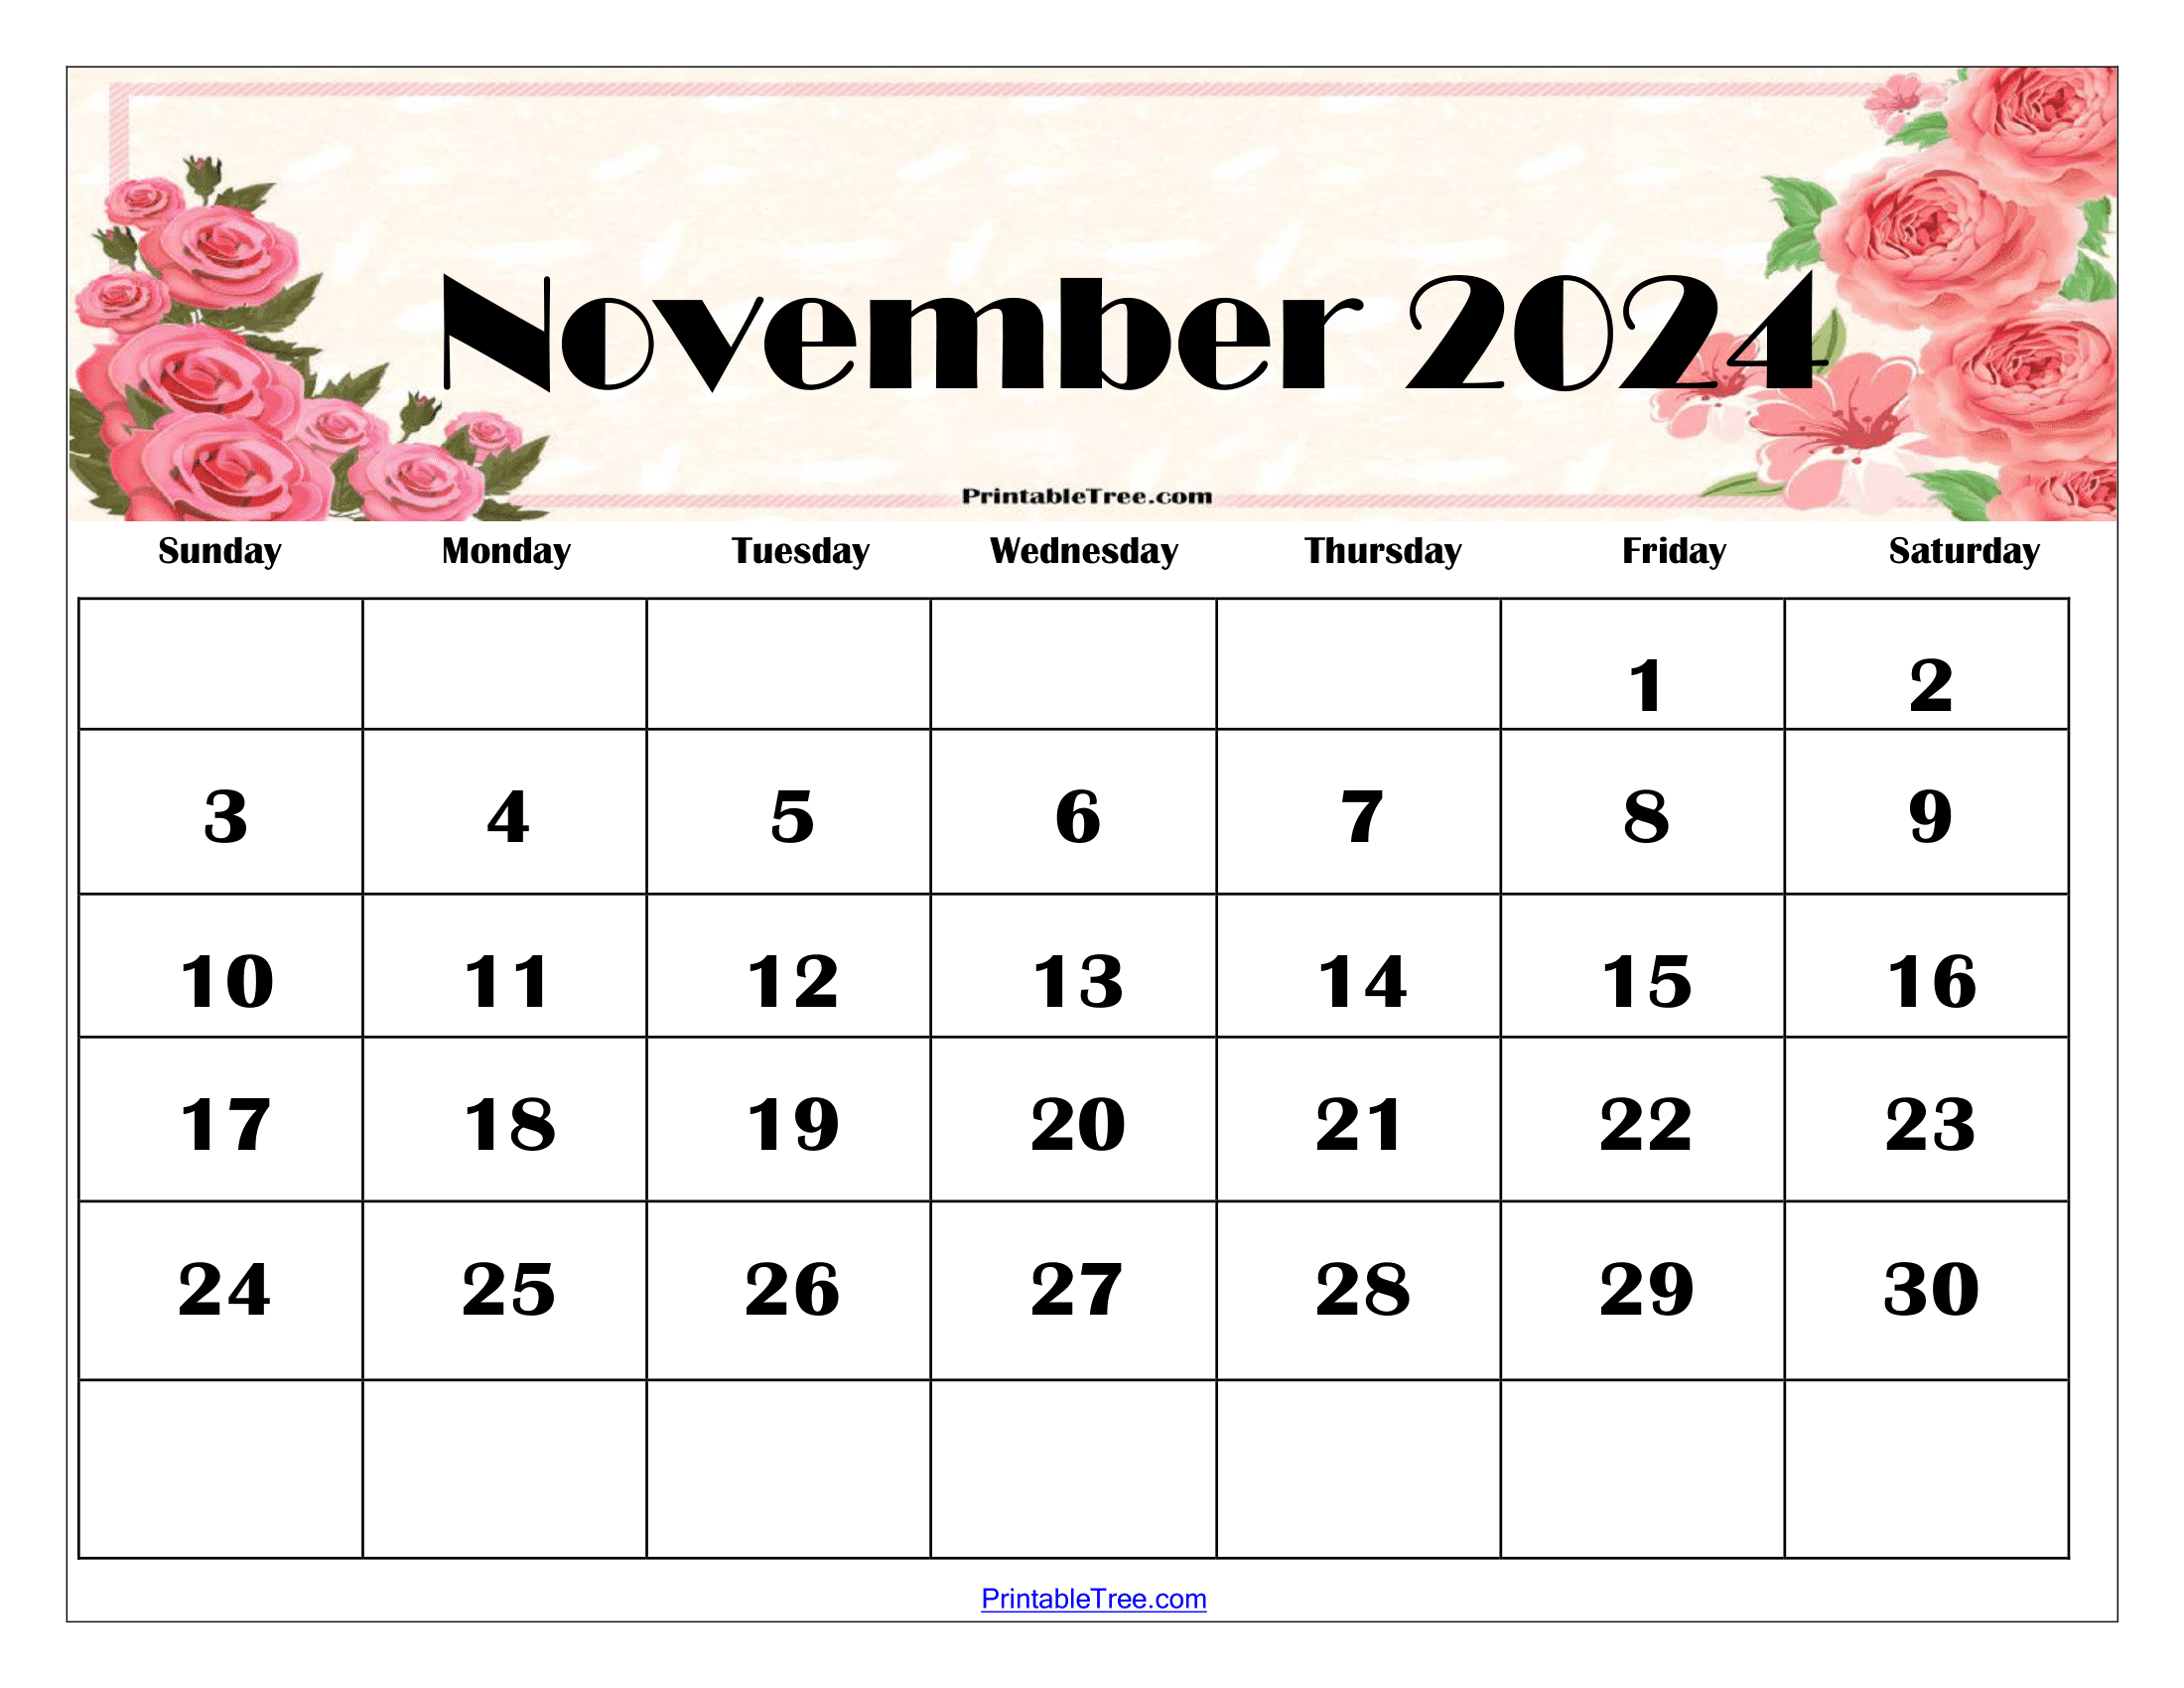 November 2024 Calendar Printable Pdf Template With Holidays throughout Free Printable Appointment Calendar November 2024